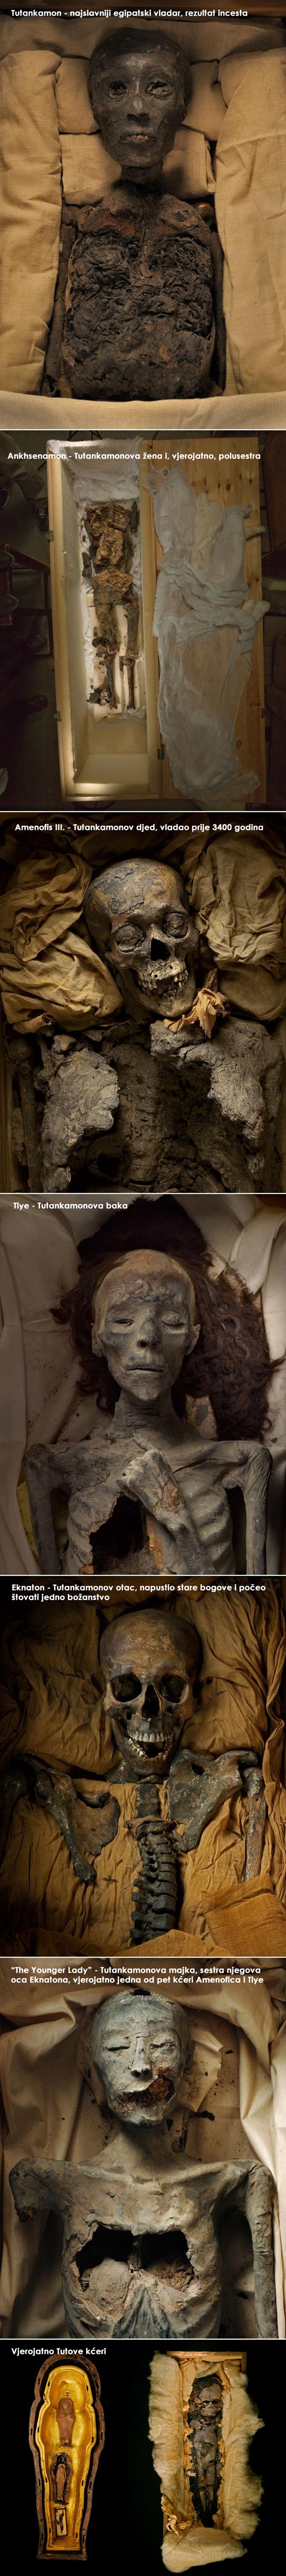 GALERIJA: Tutankamonova obitelj u slikama